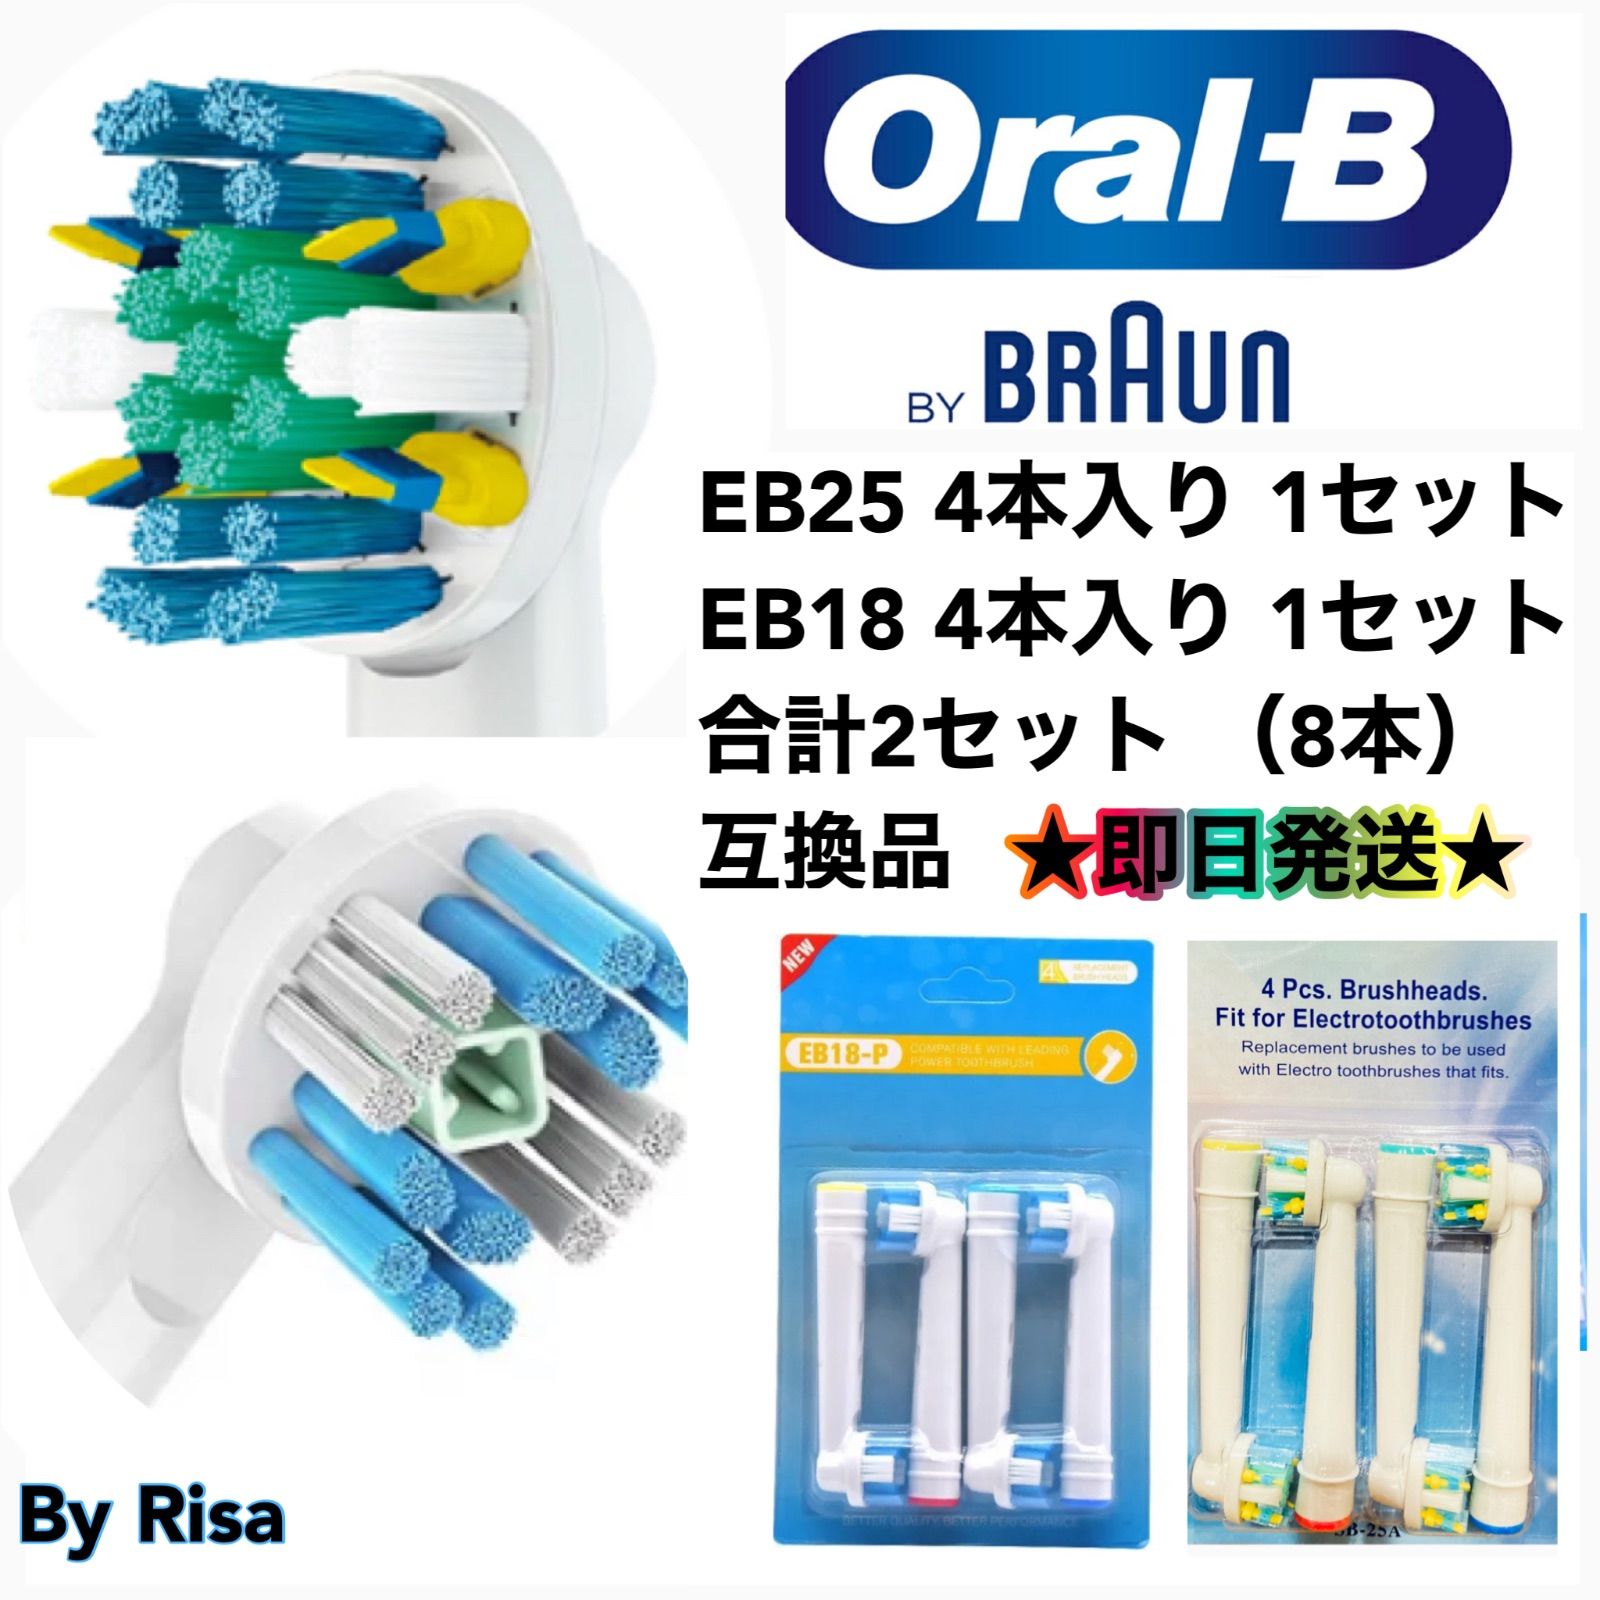 BRAUN Oral-B アクセサリー2点セット - 電動歯ブラシ